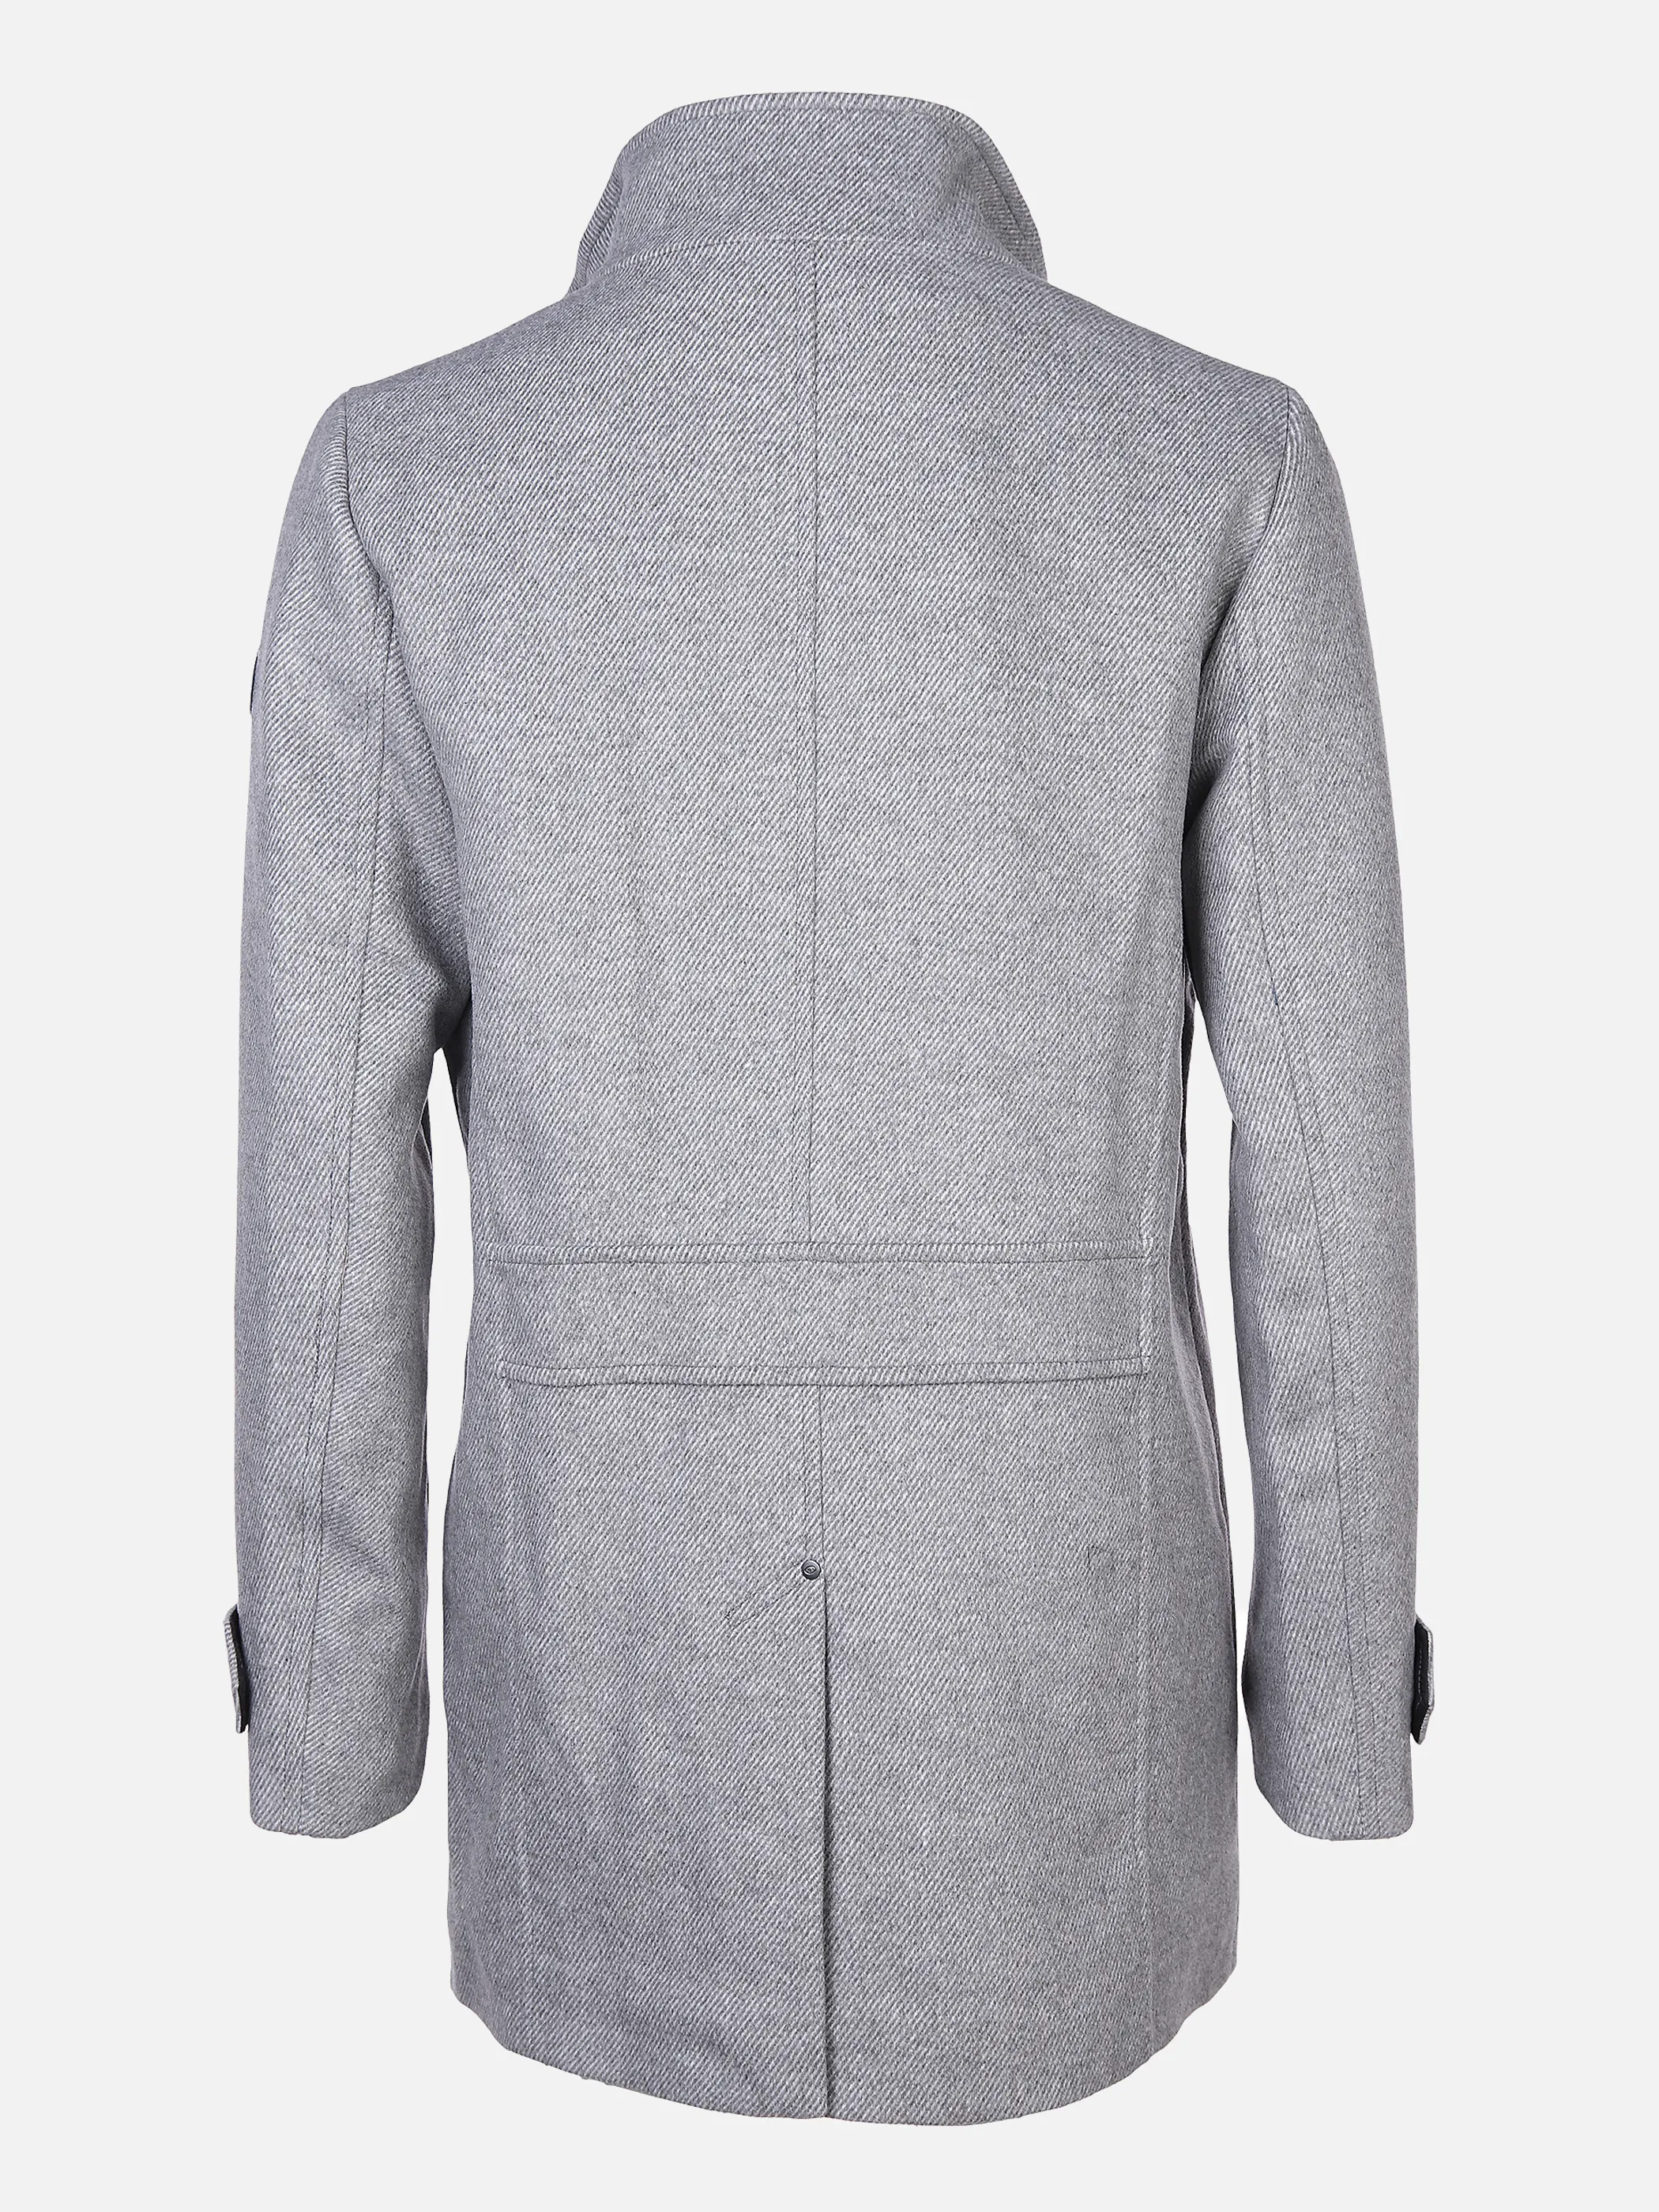 Tom Tailor 1032506 wool coat 2 in 1 Grau 869542 30507 2